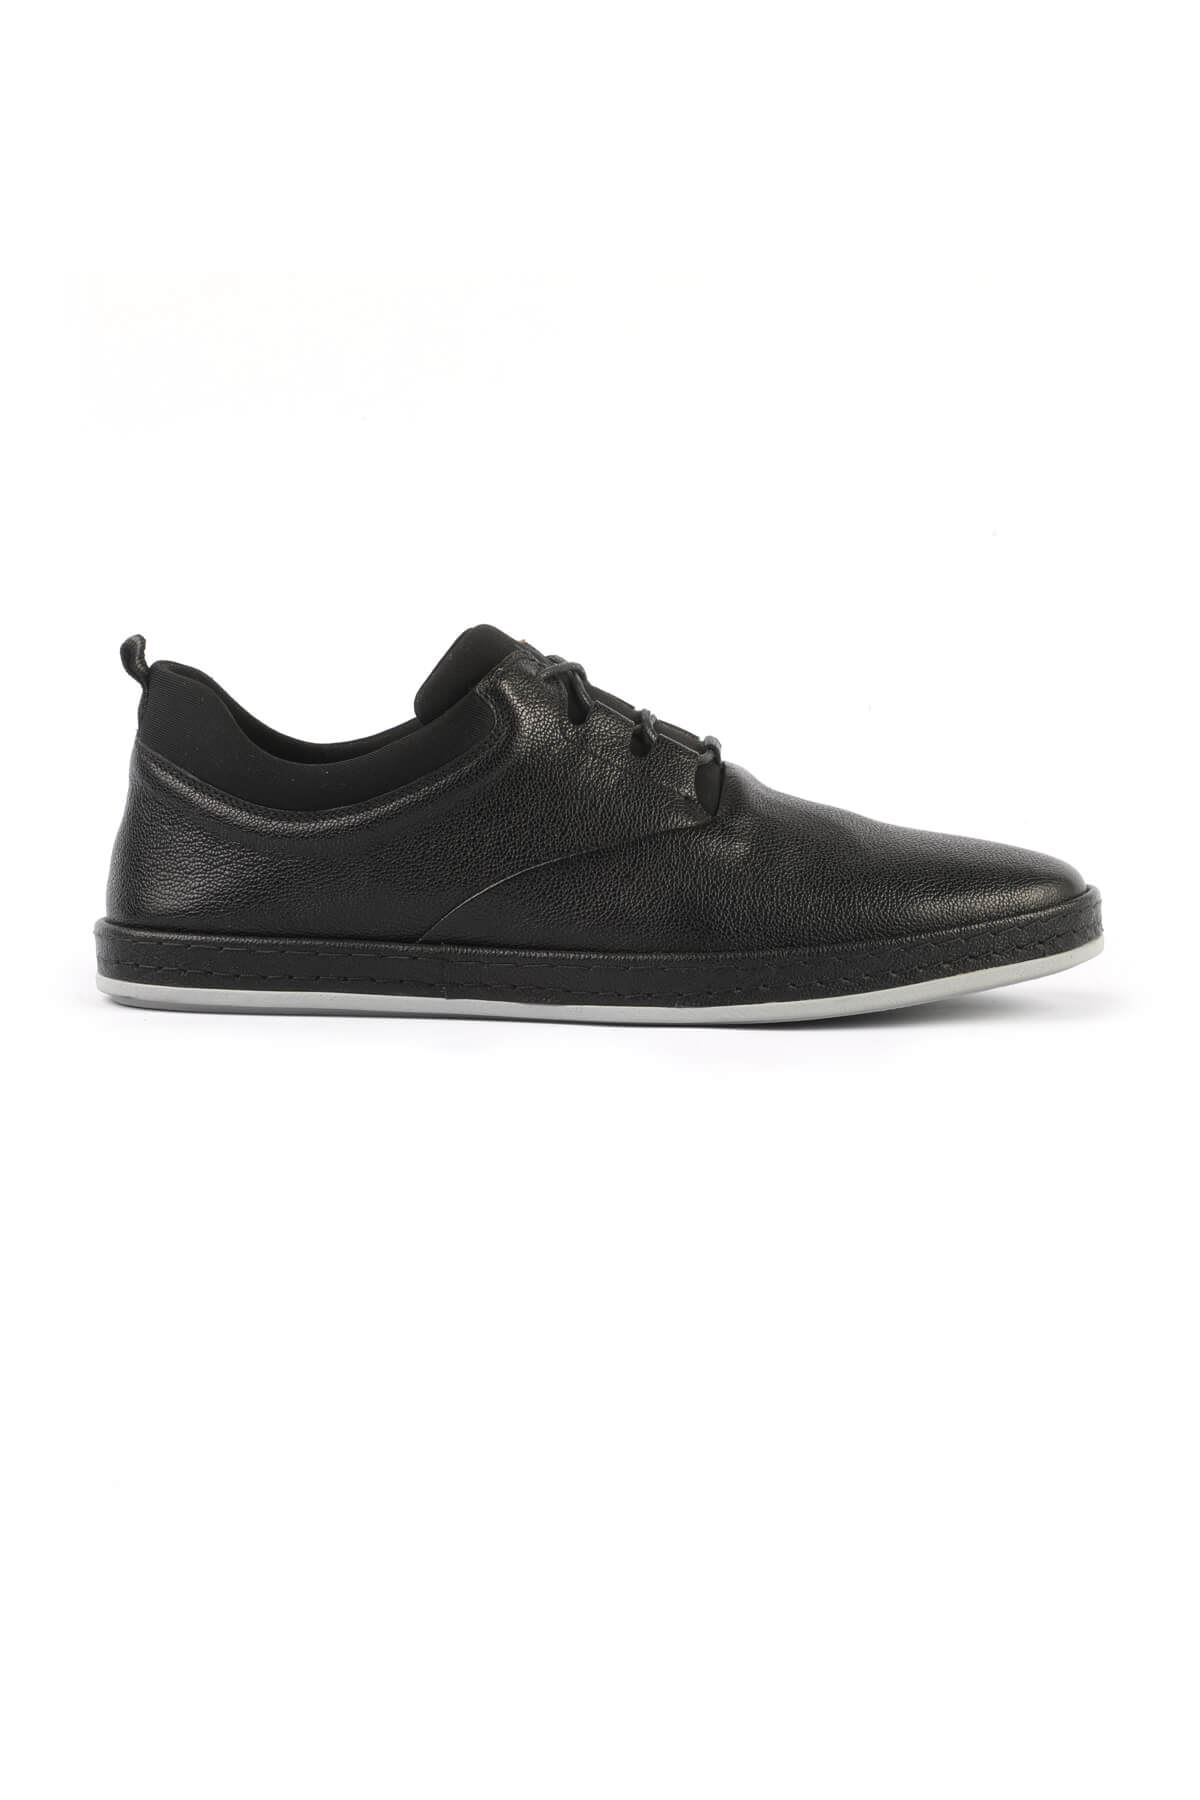 Libero 2979 Black Casual Shoes